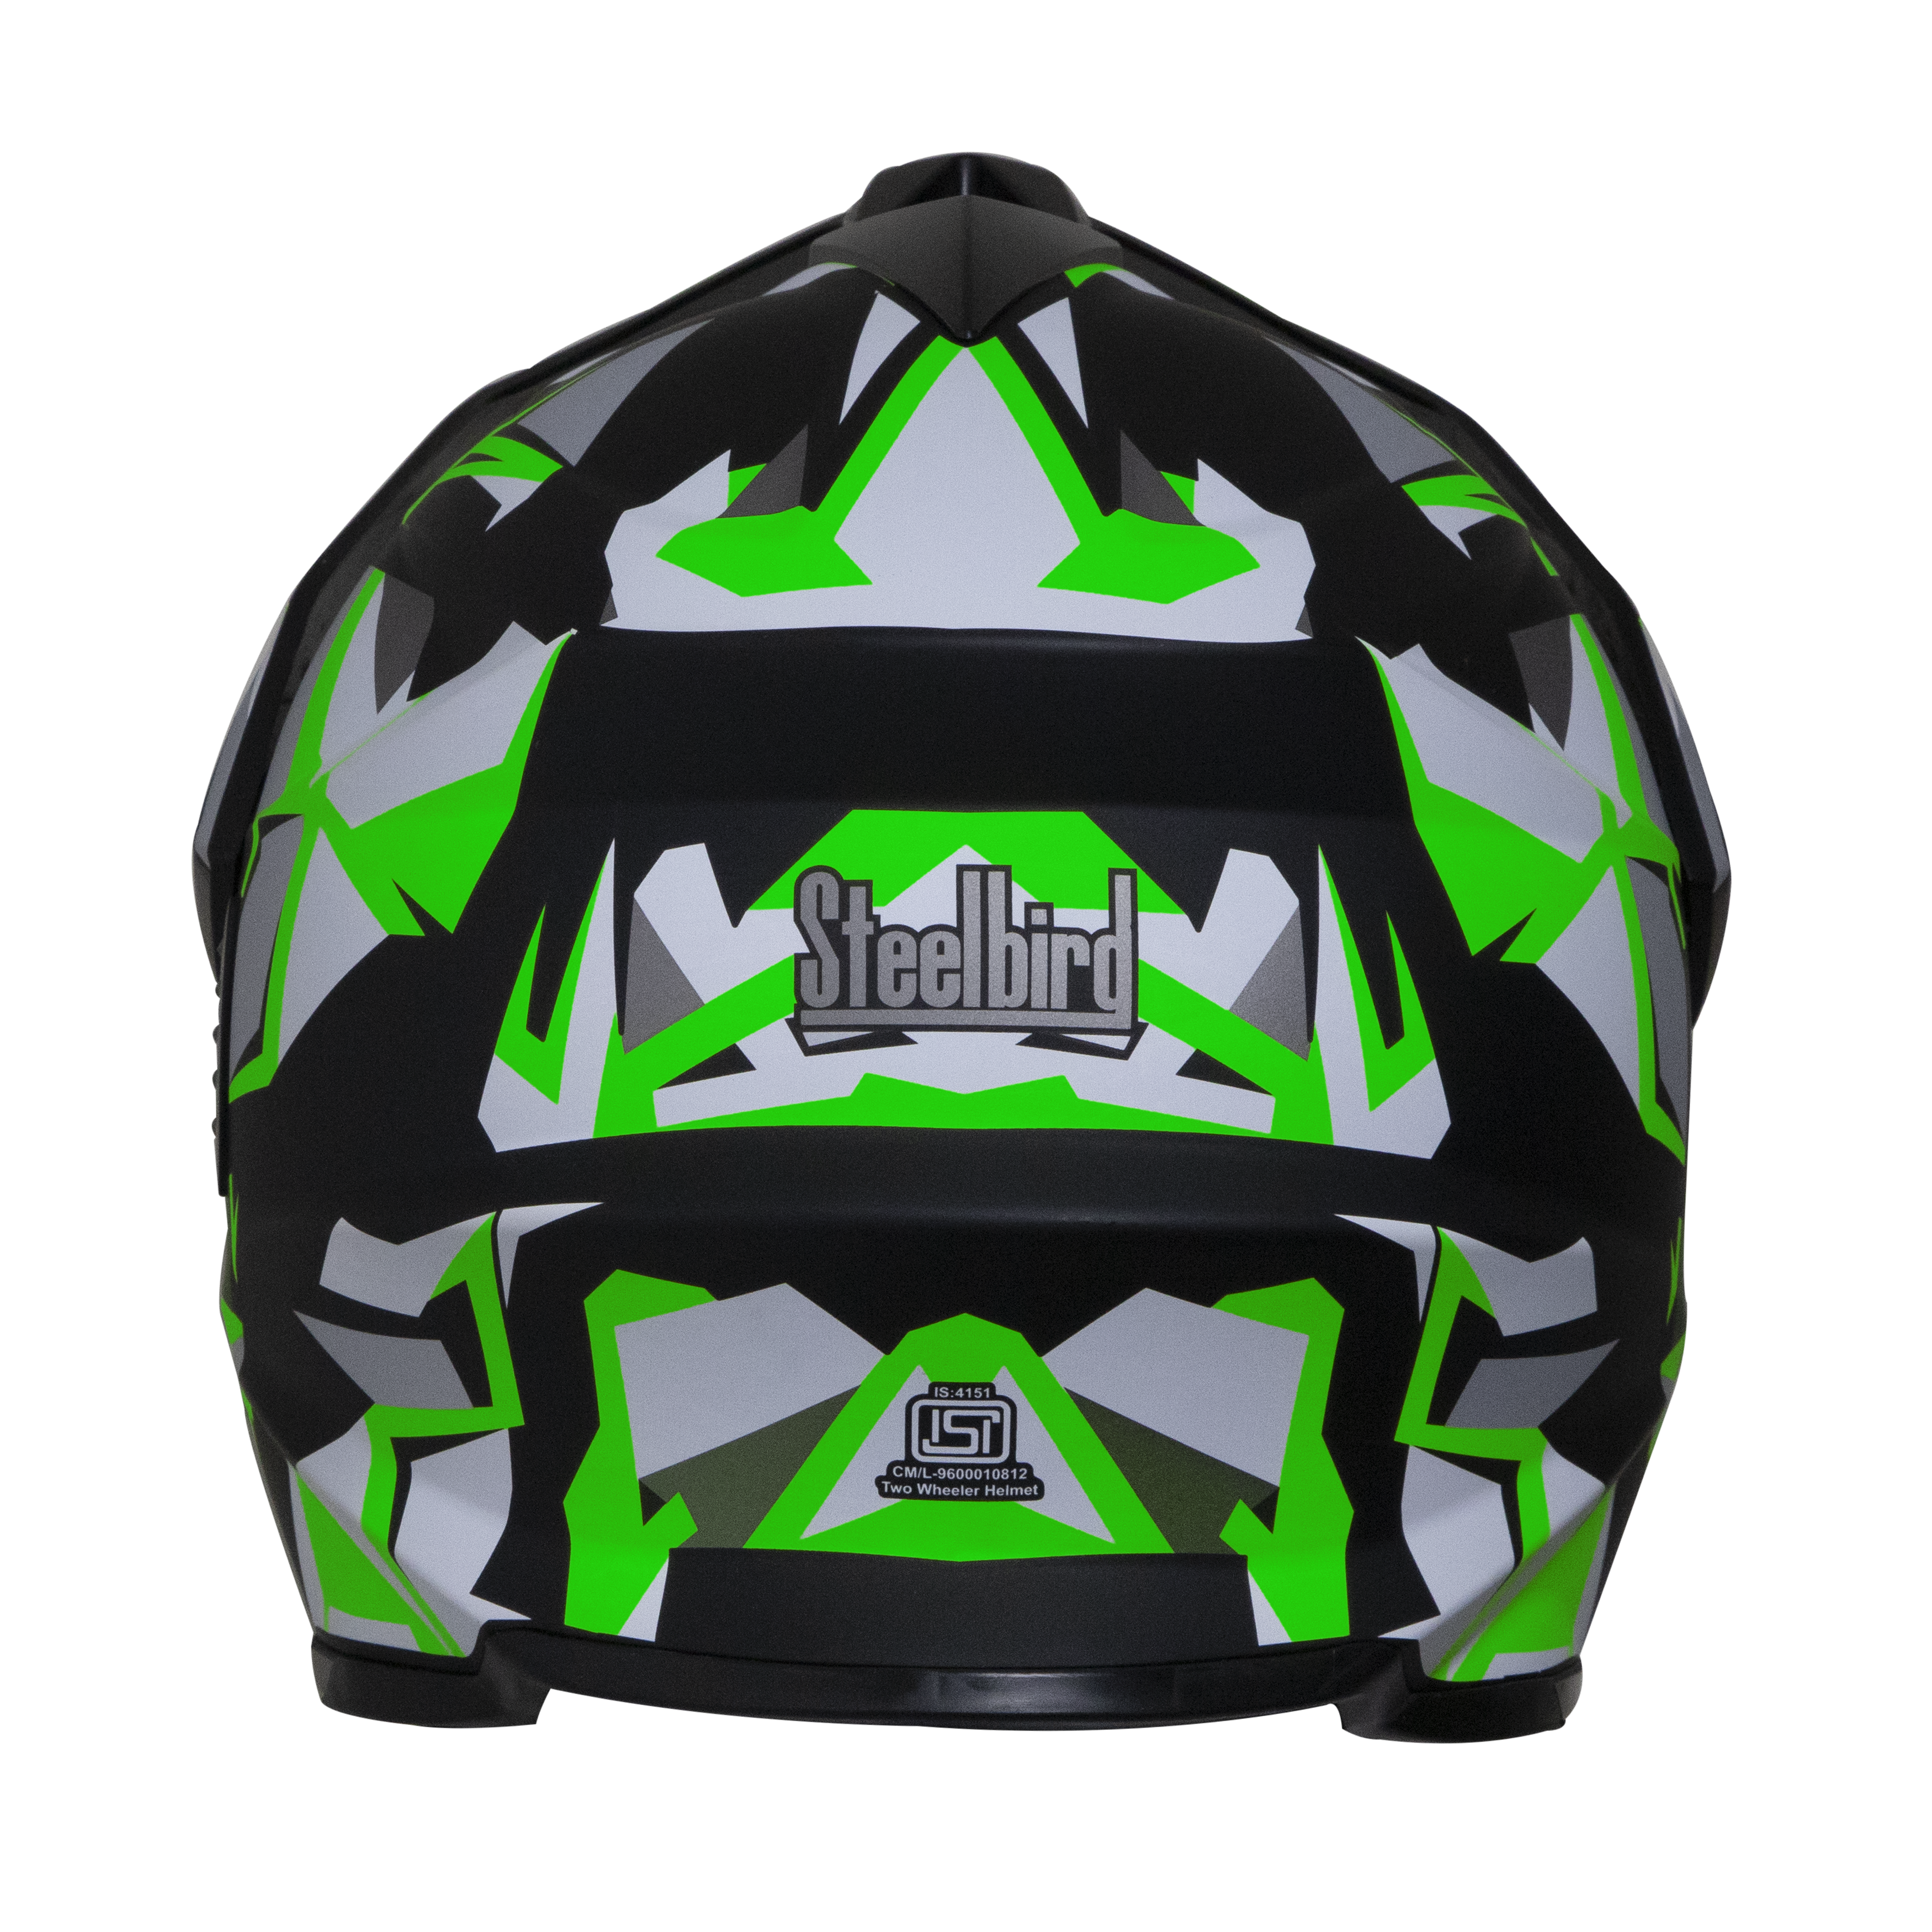 Steelbird Off Road Bang KTN ISI Certified ABS Material Shell Motocross Helmet (Matt Black Green With Smoke Visor)